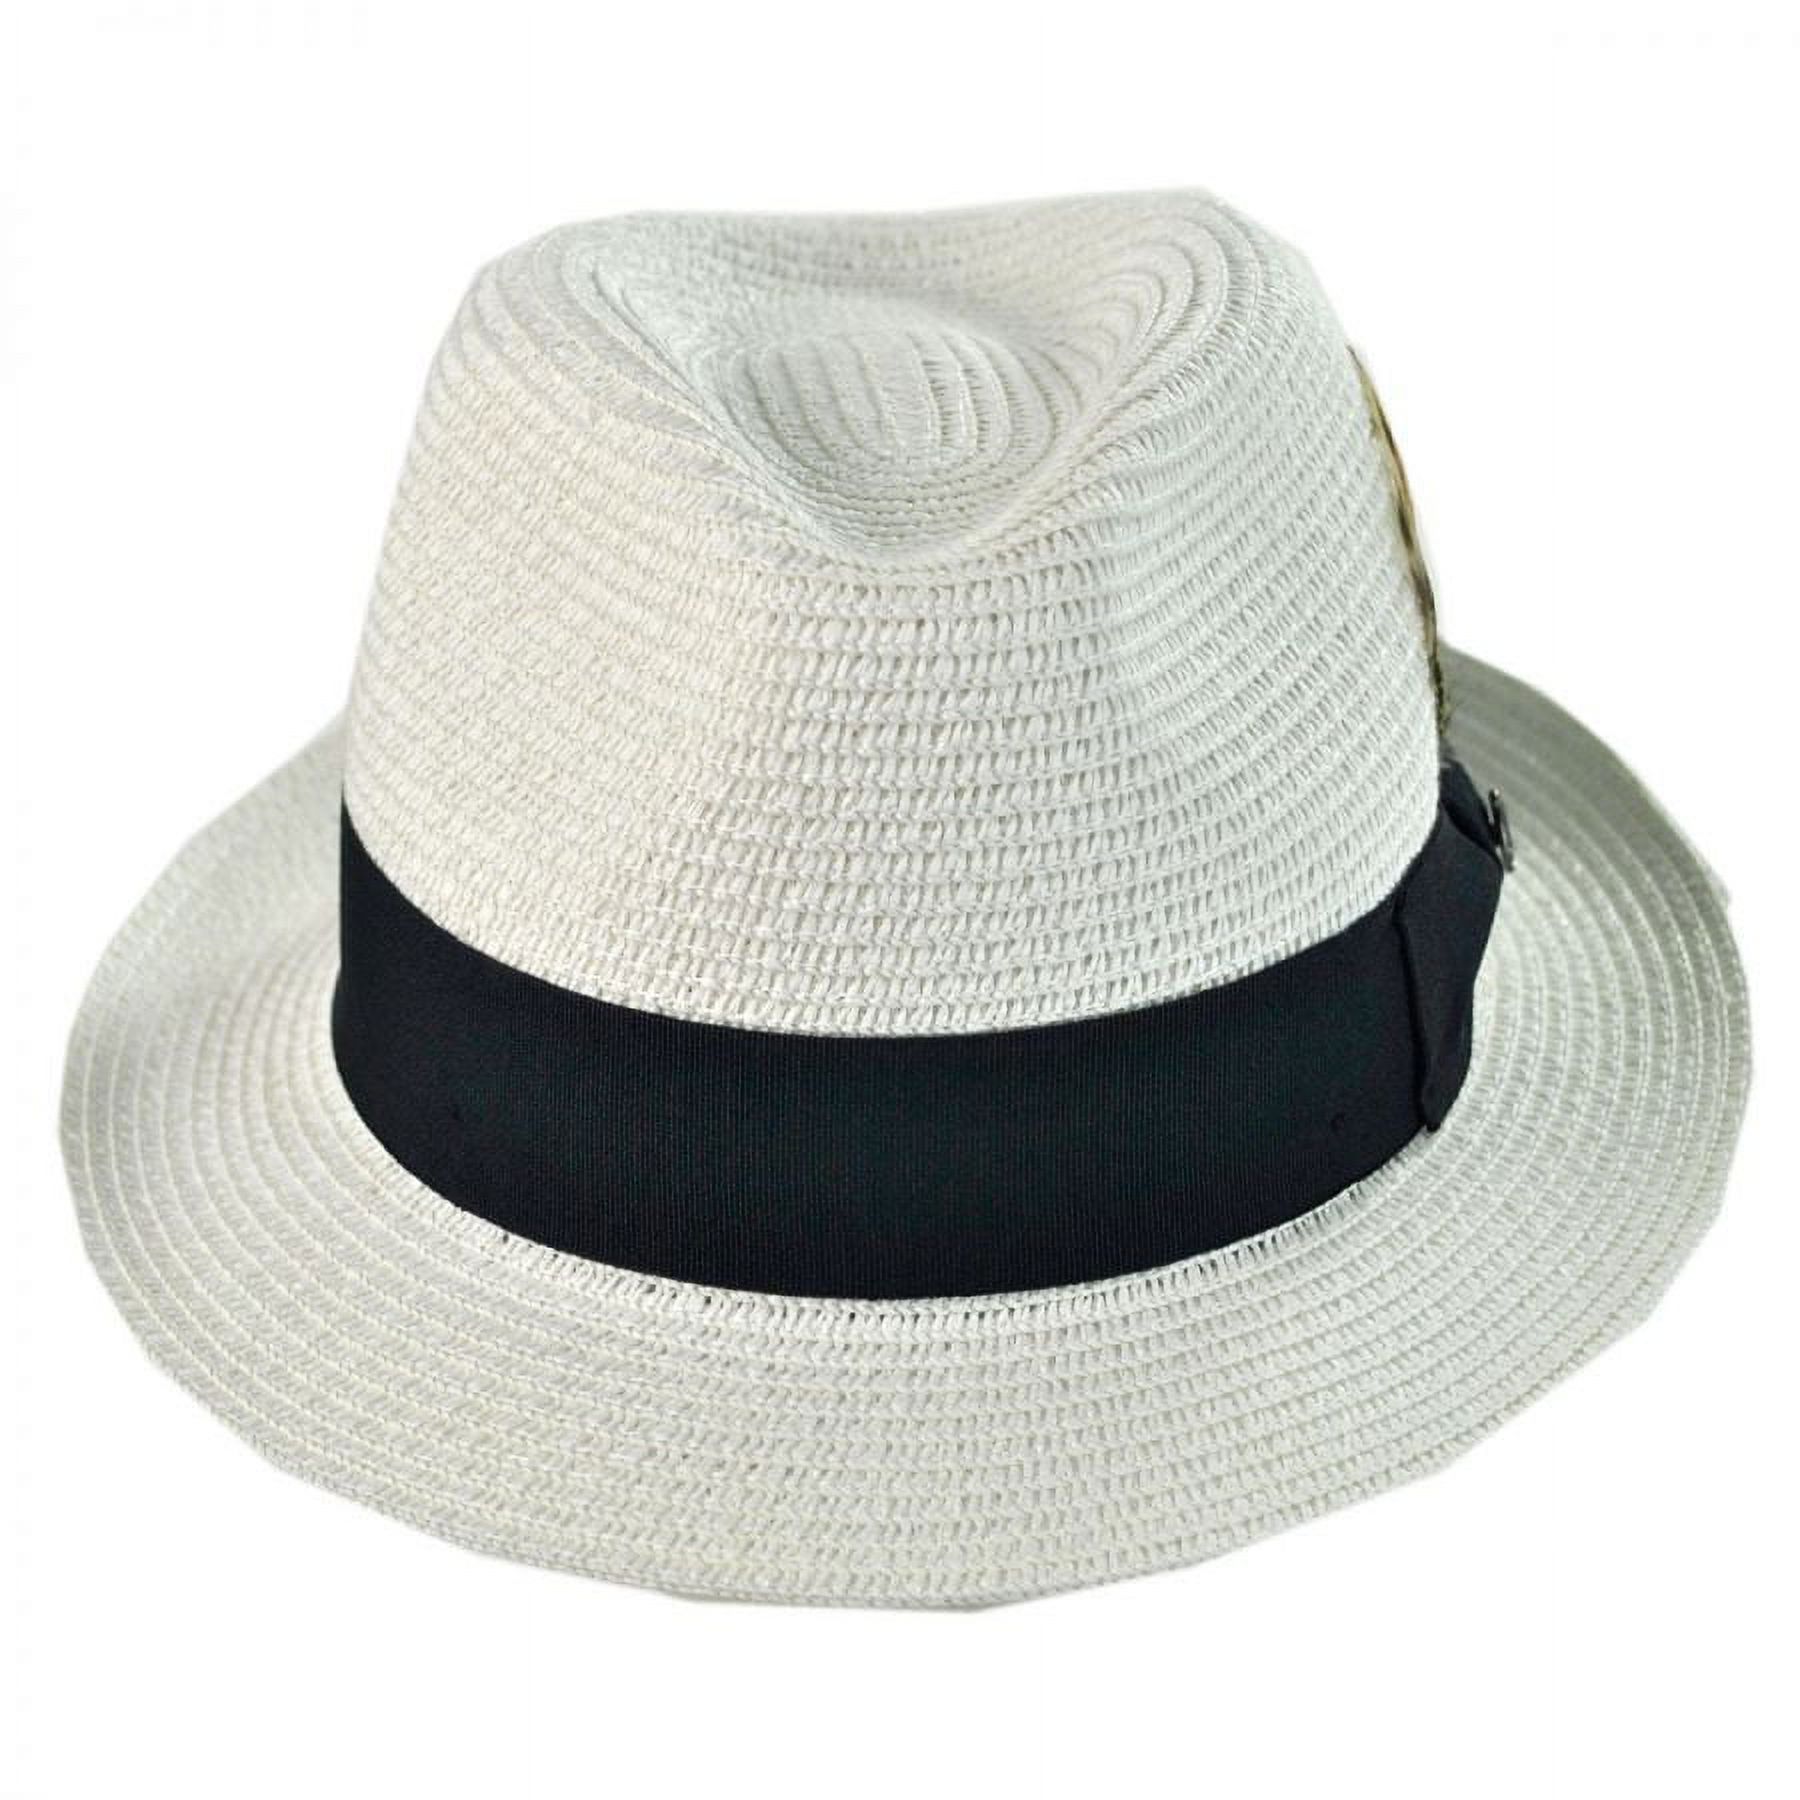 Toyo Straw Braid Trilby Fedora Hat - L - White - image 2 of 6